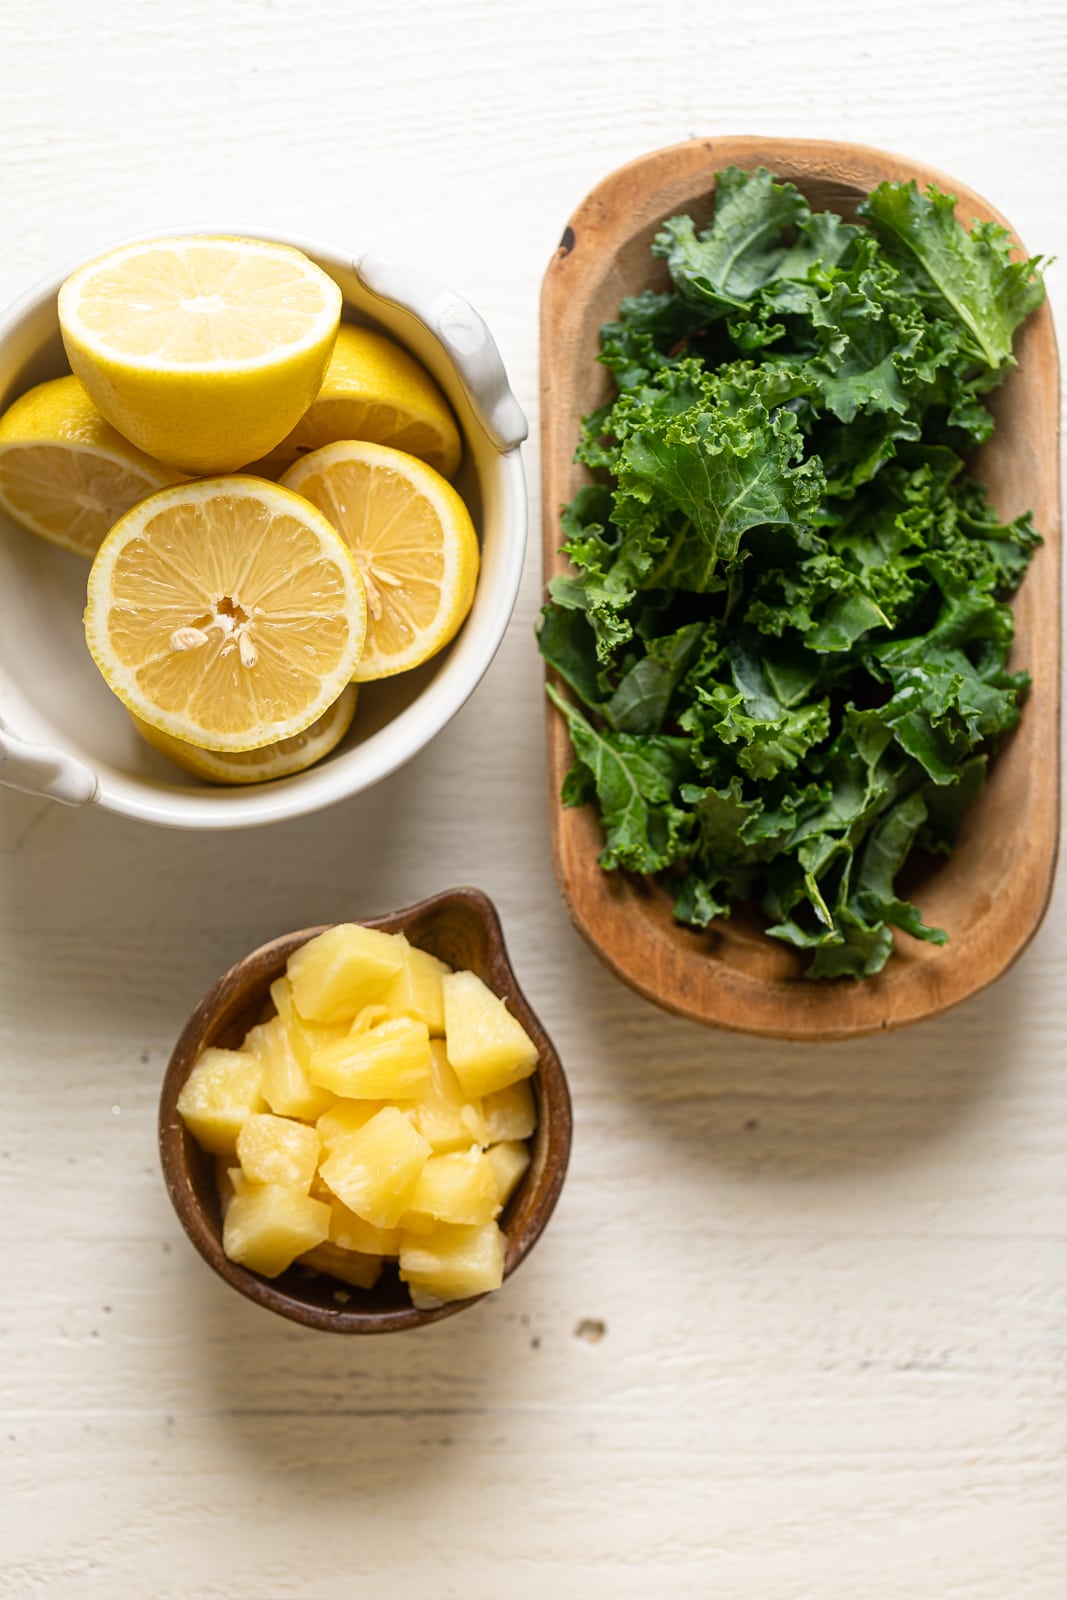 Ingredients for Kale Lemonade including kale, lemons, and pineapple chunks